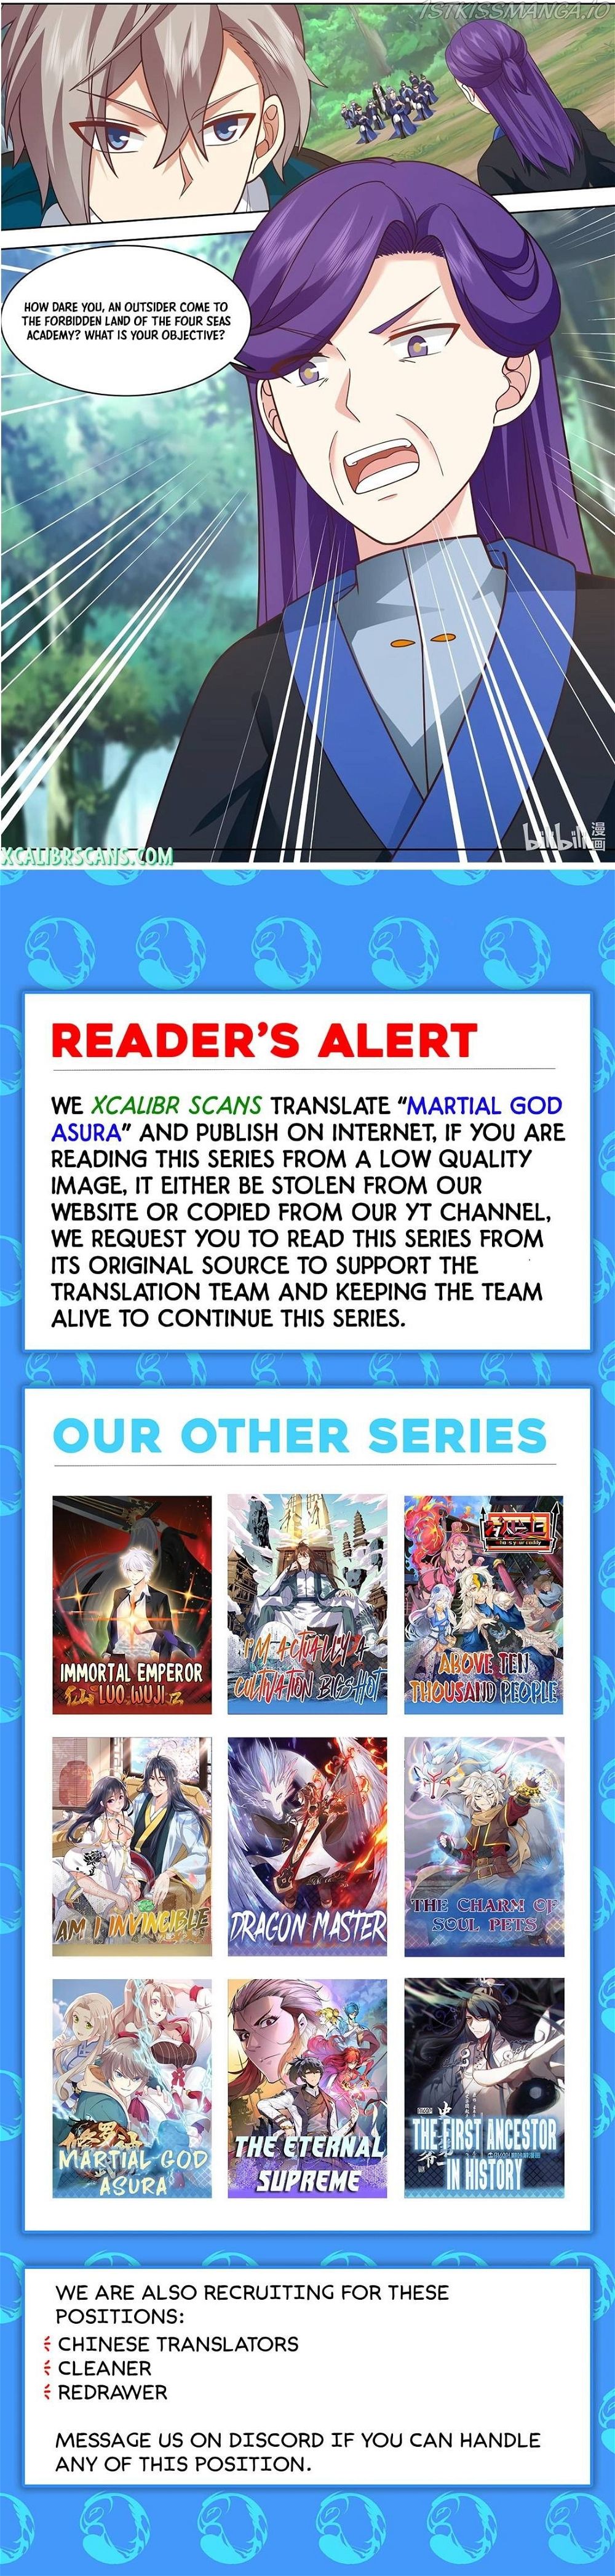 Martial God Asura Chapter 493 - Page 10